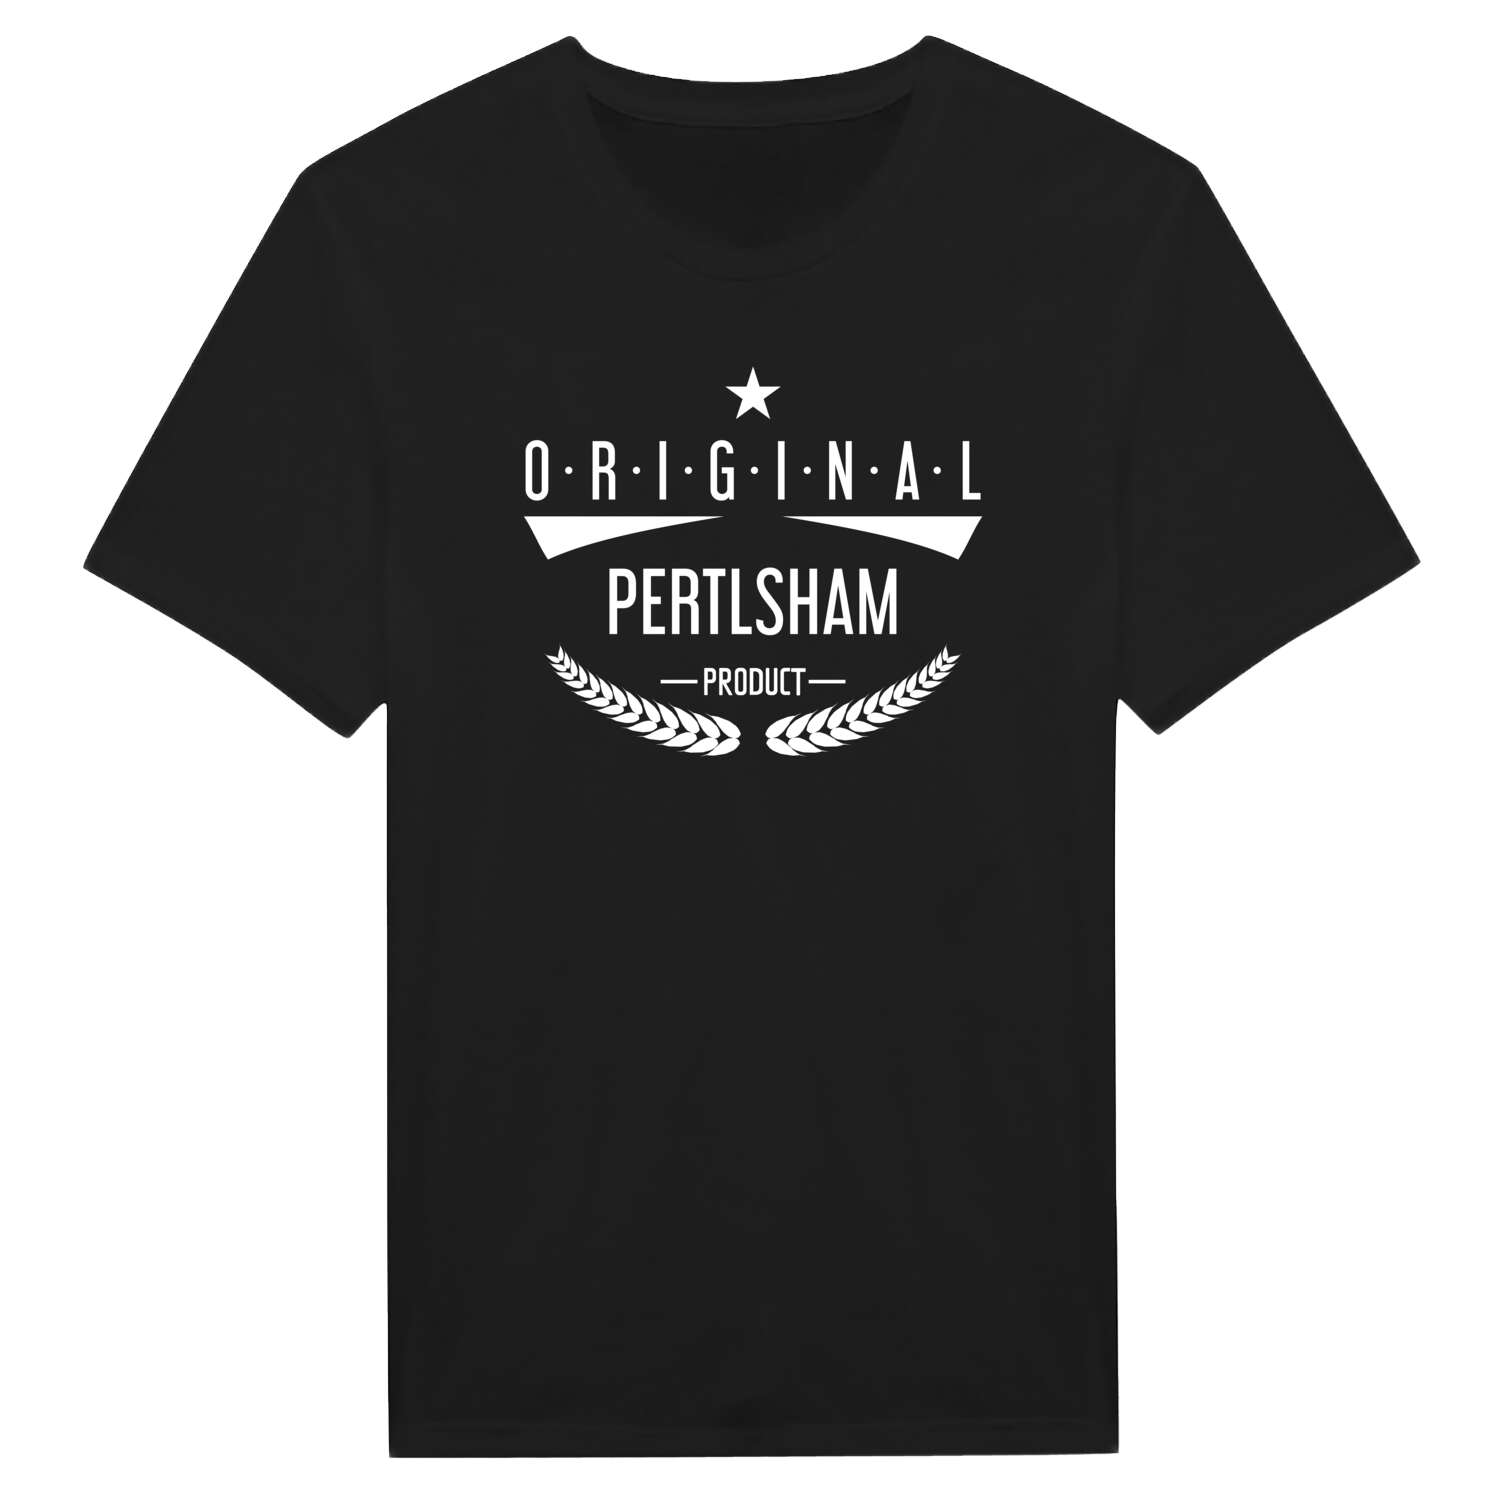 Pertlsham T-Shirt »Original Product«